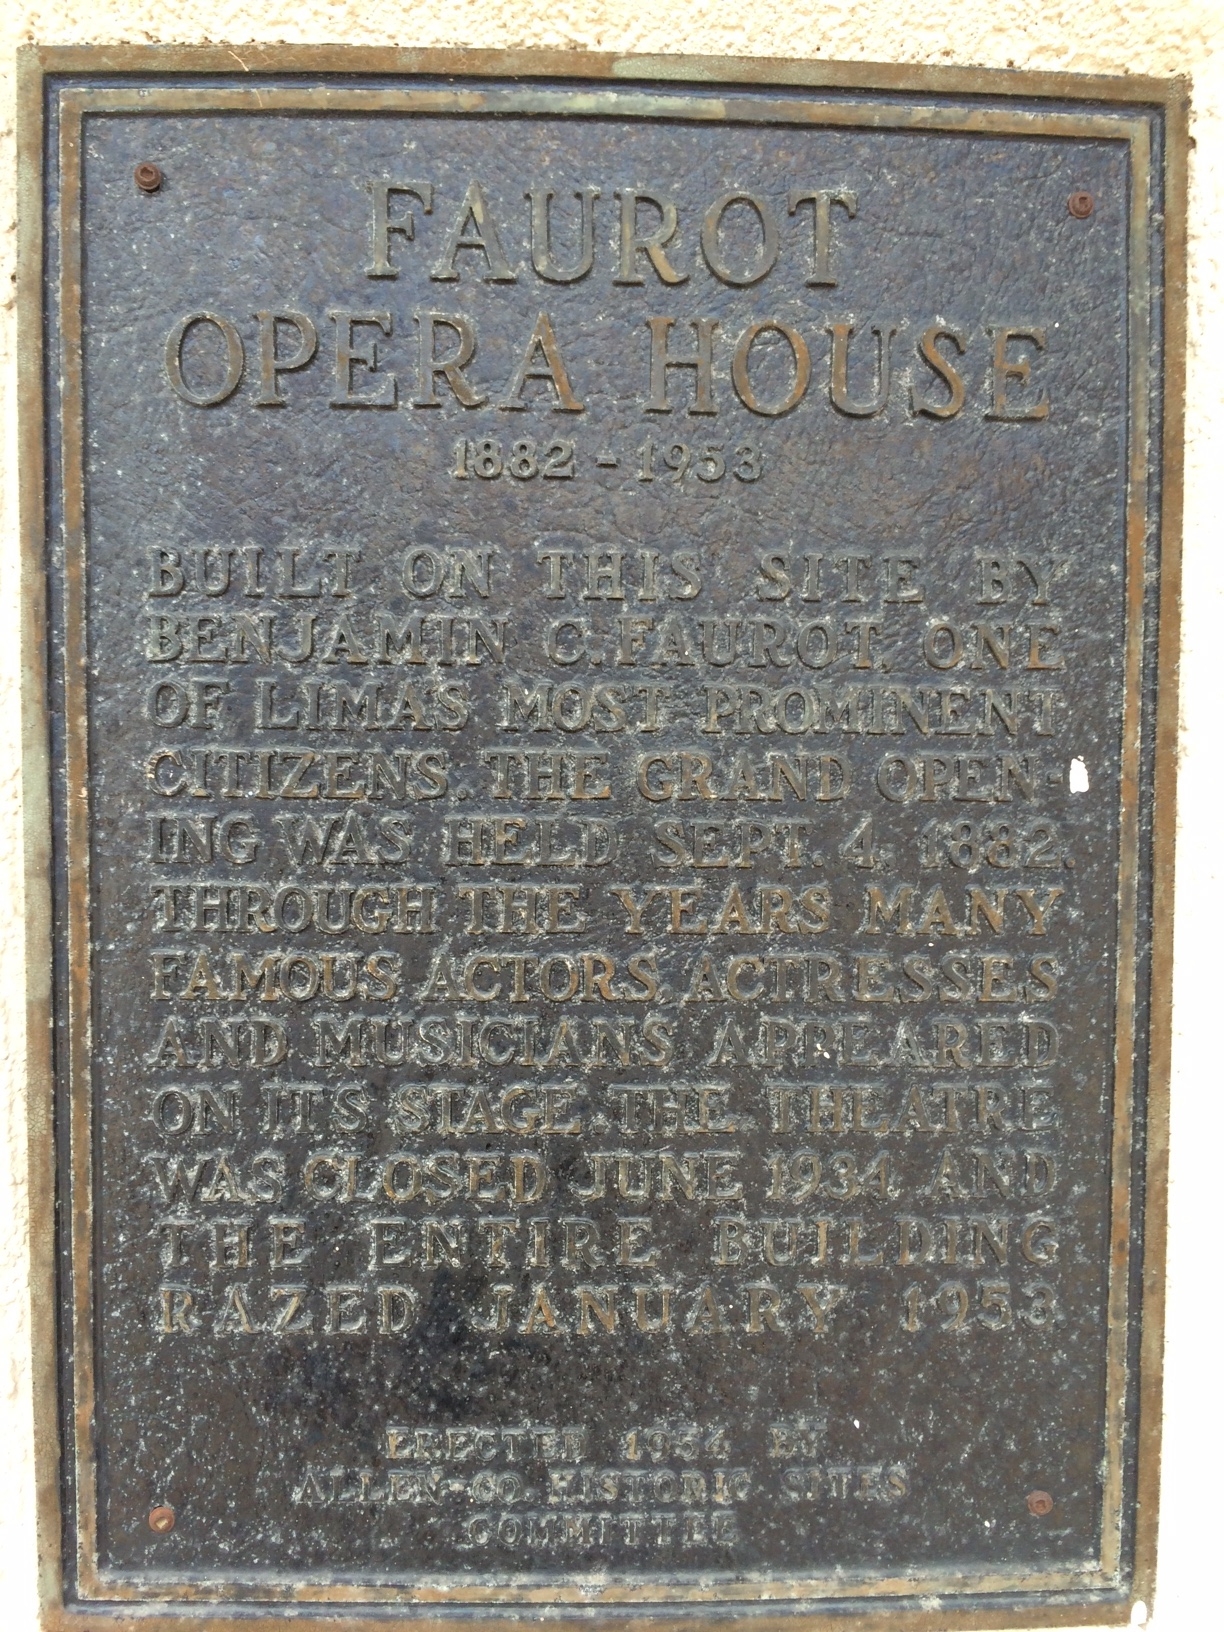 Faurot Opera House Marker